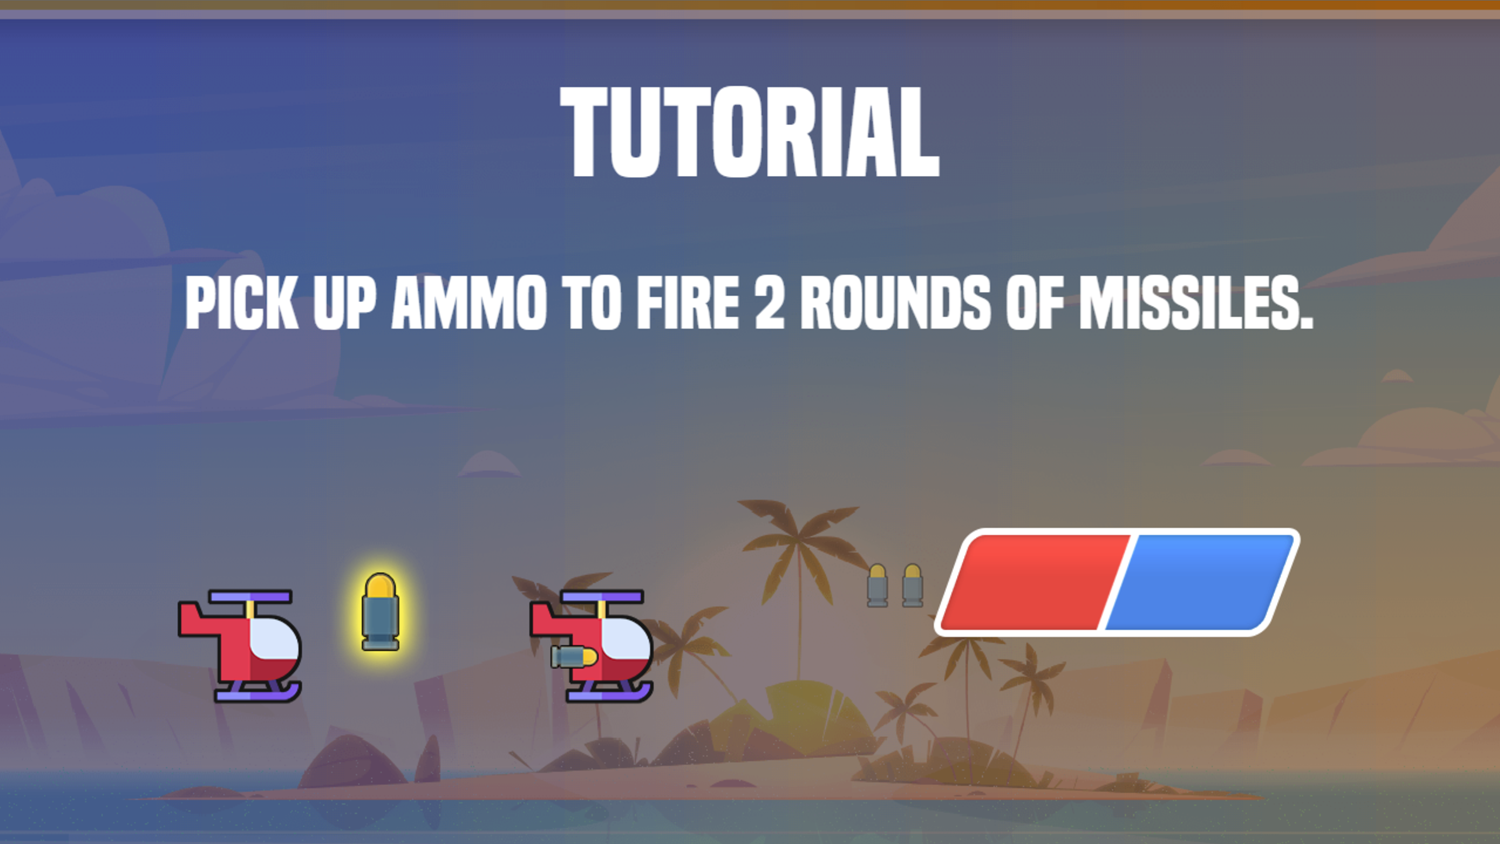 Heli Battle Game Pick Up Ammo Instructions Screen Screenshot.